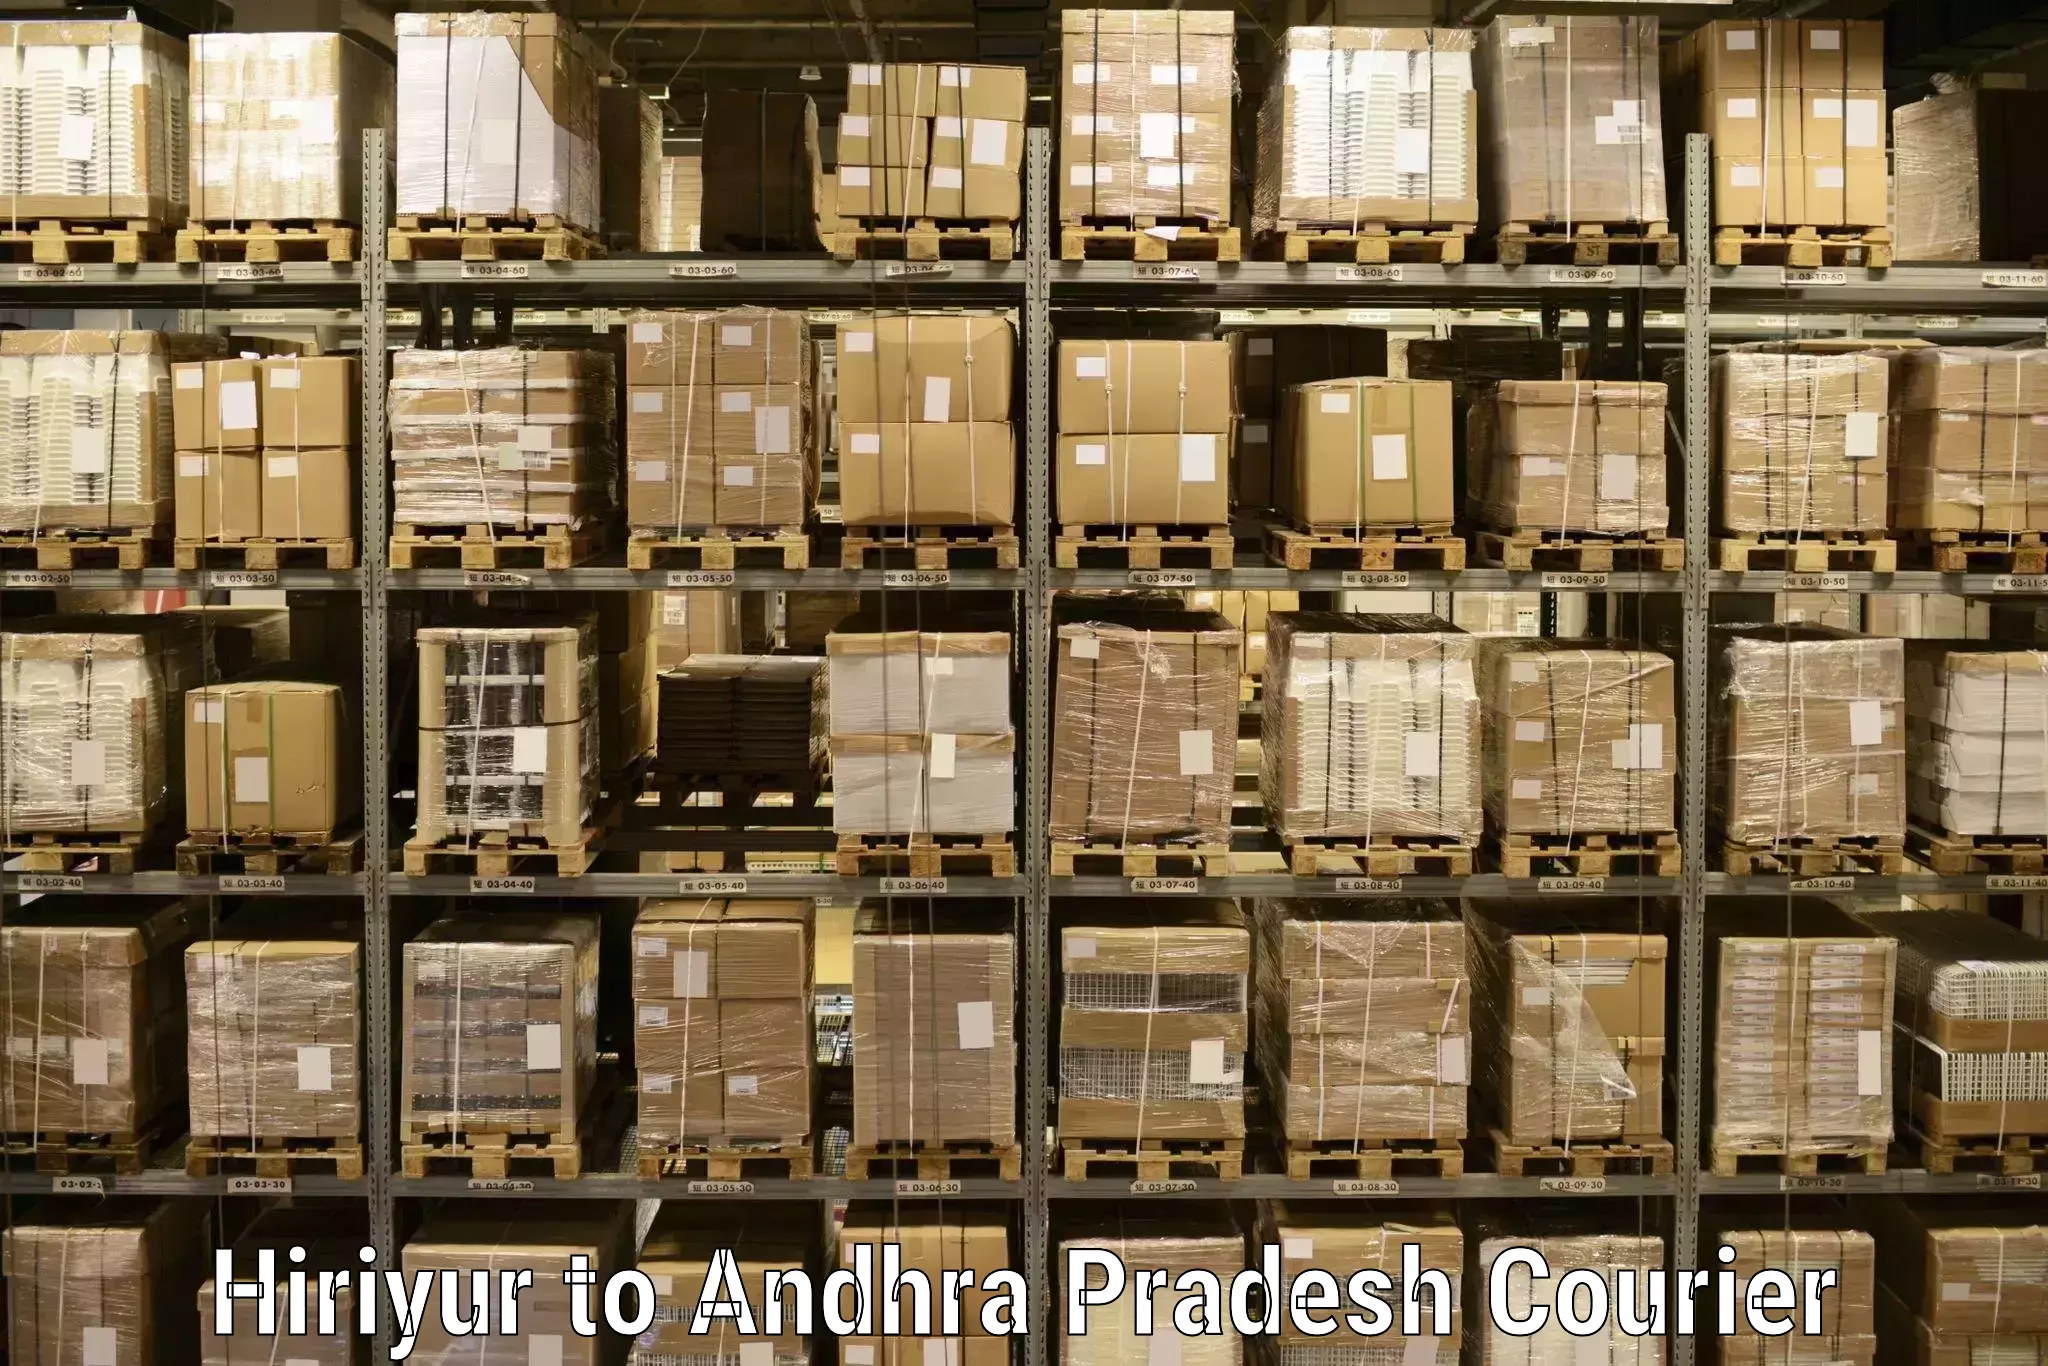 Courier service comparison Hiriyur to Hindupur